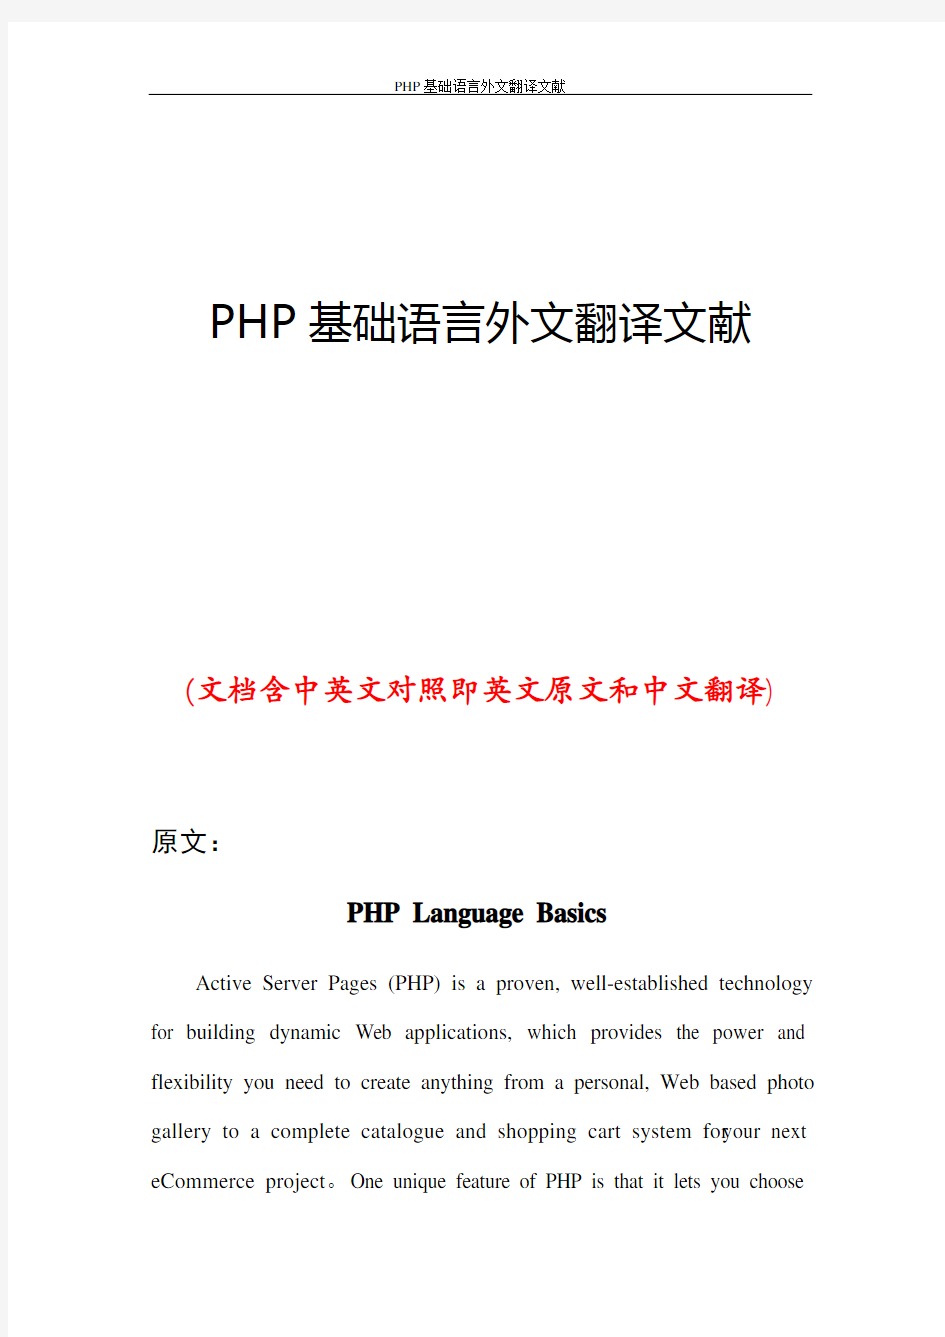 PHP基础语言外文翻译文献